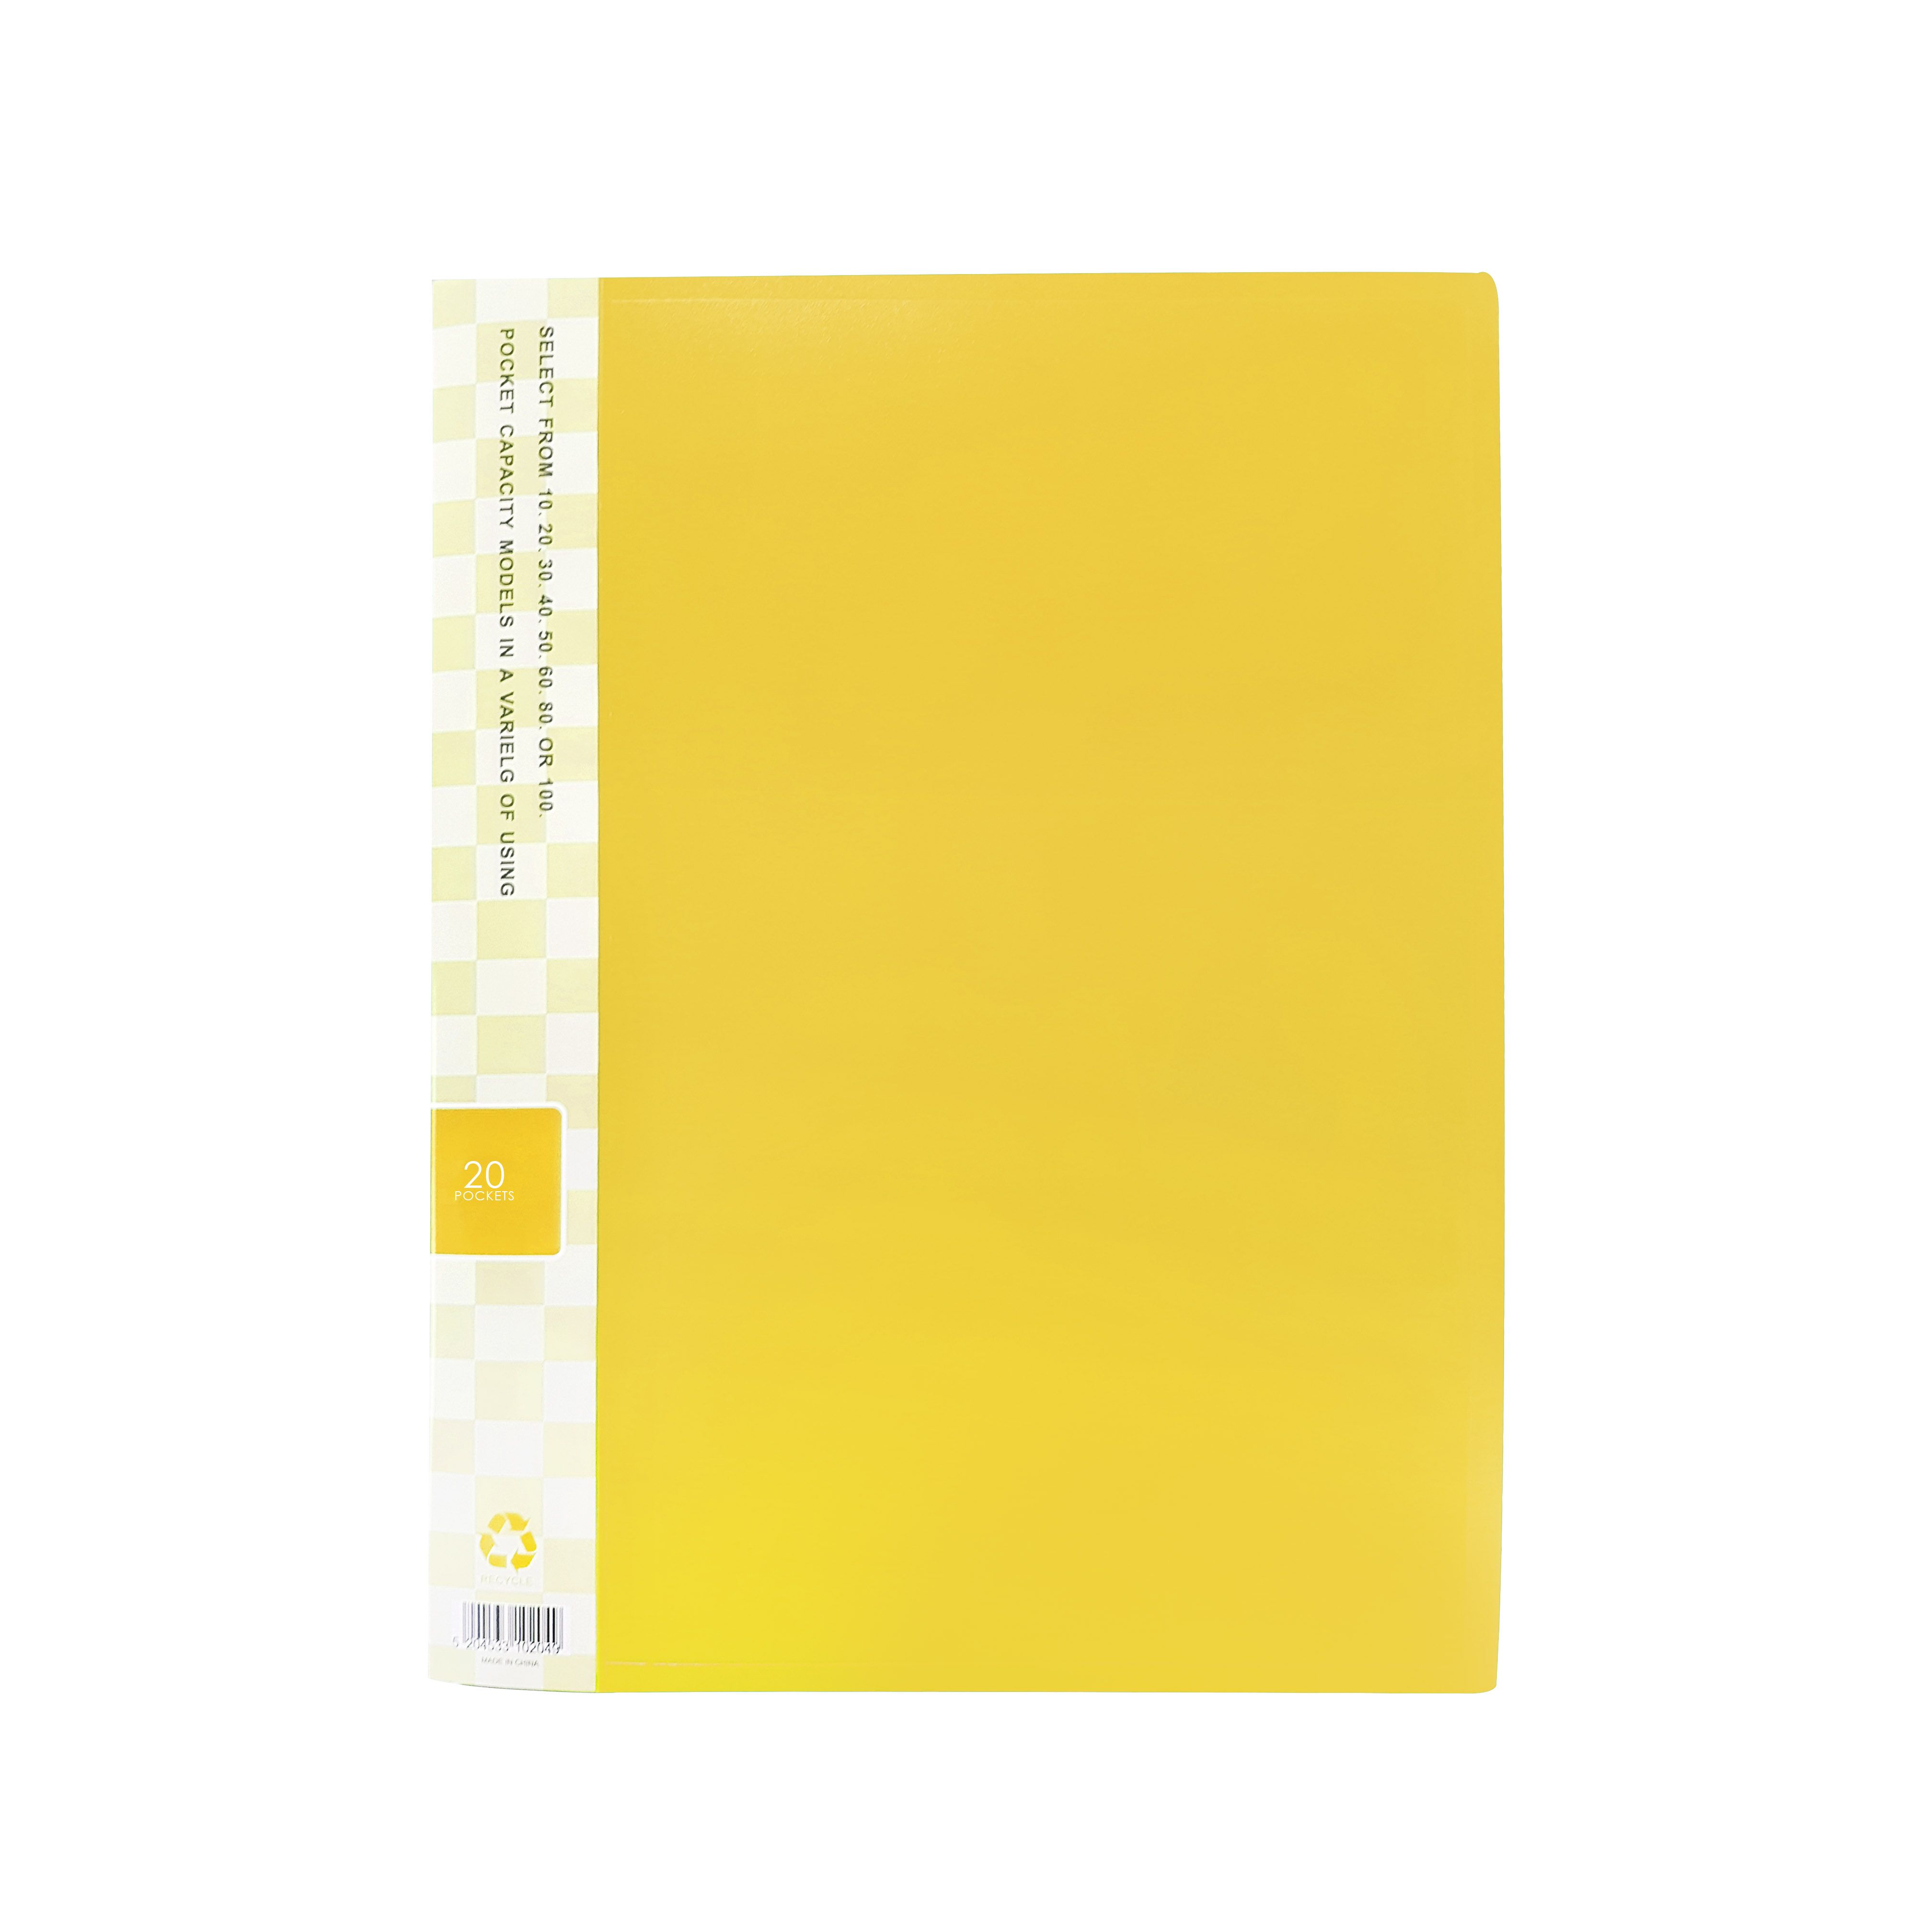 BASIC Nτοσιέ Σουπλ με 20 Διαφανείς Θήκες, Α4 σε 5 χρώματα - Kίτρινο